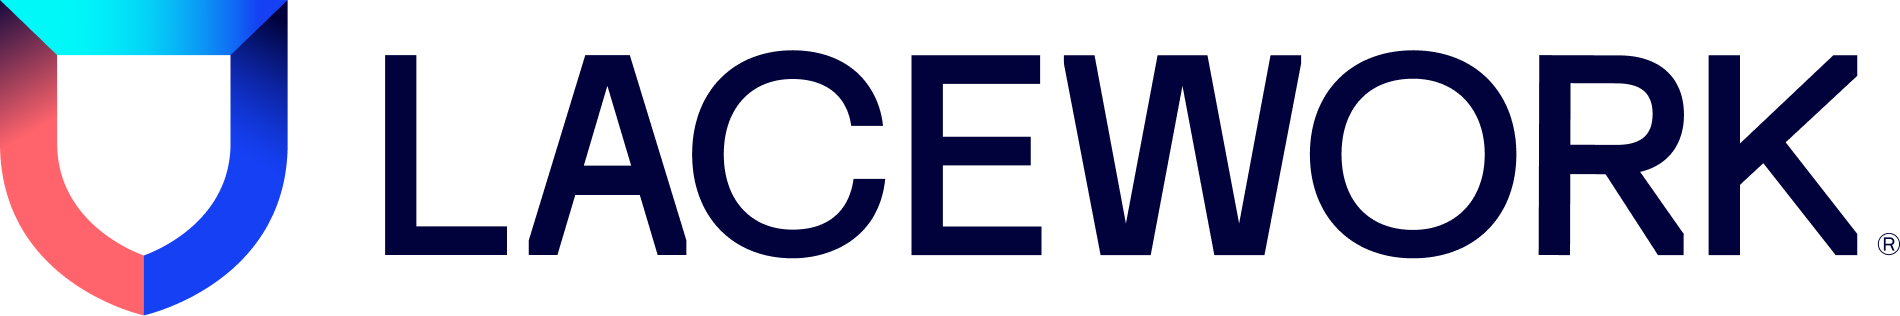 lacework_logo